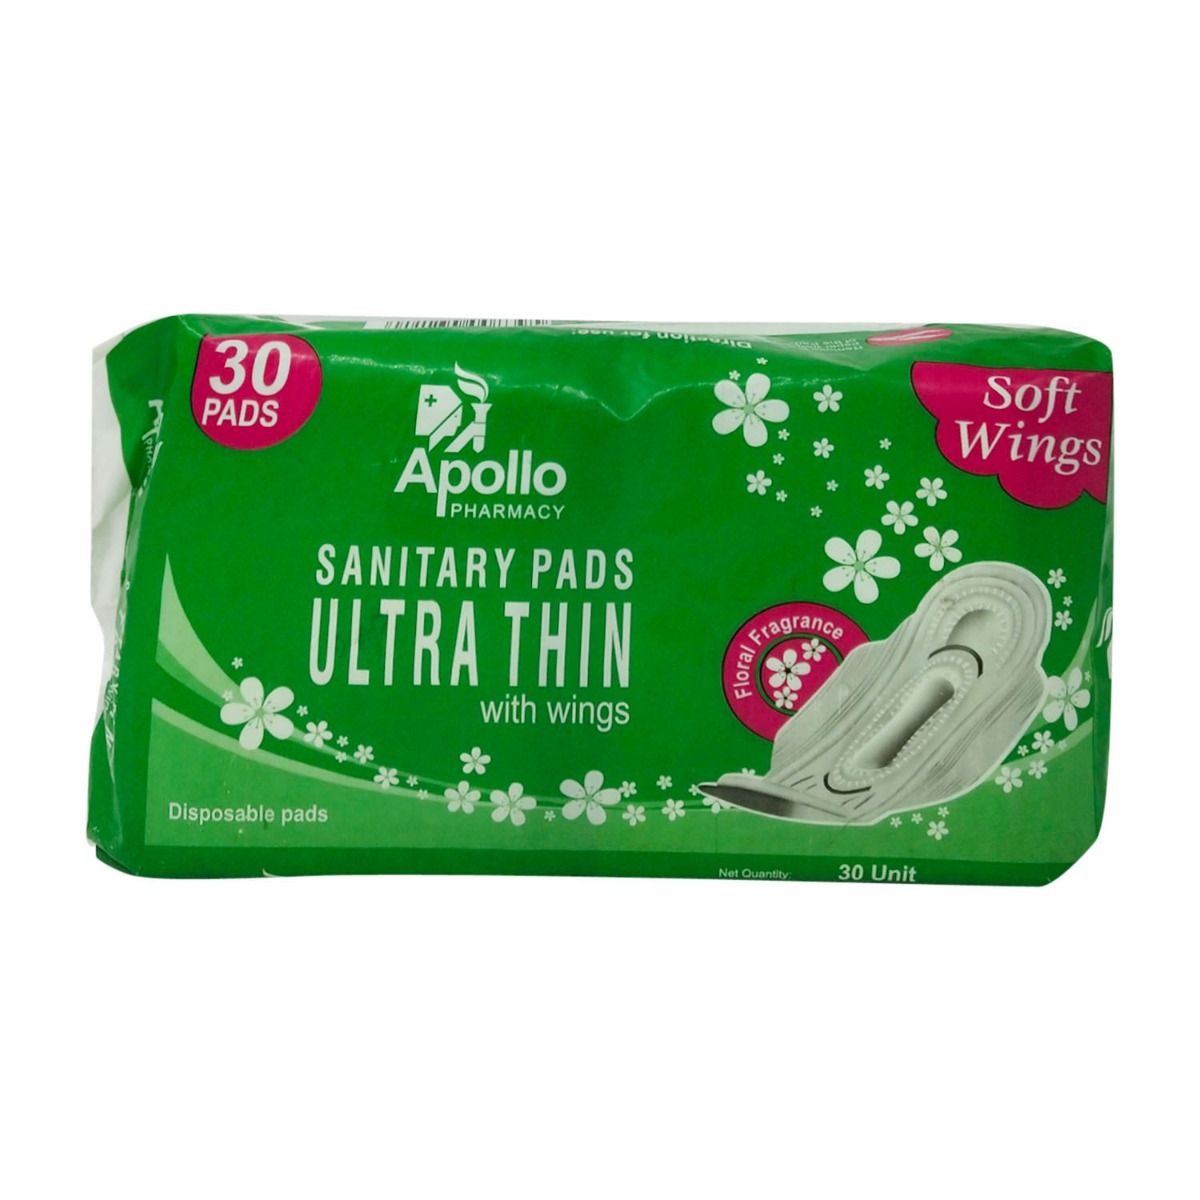 Buy Apollo Pharmacy Ultrathin Sanitary Pads, 30 Count Online